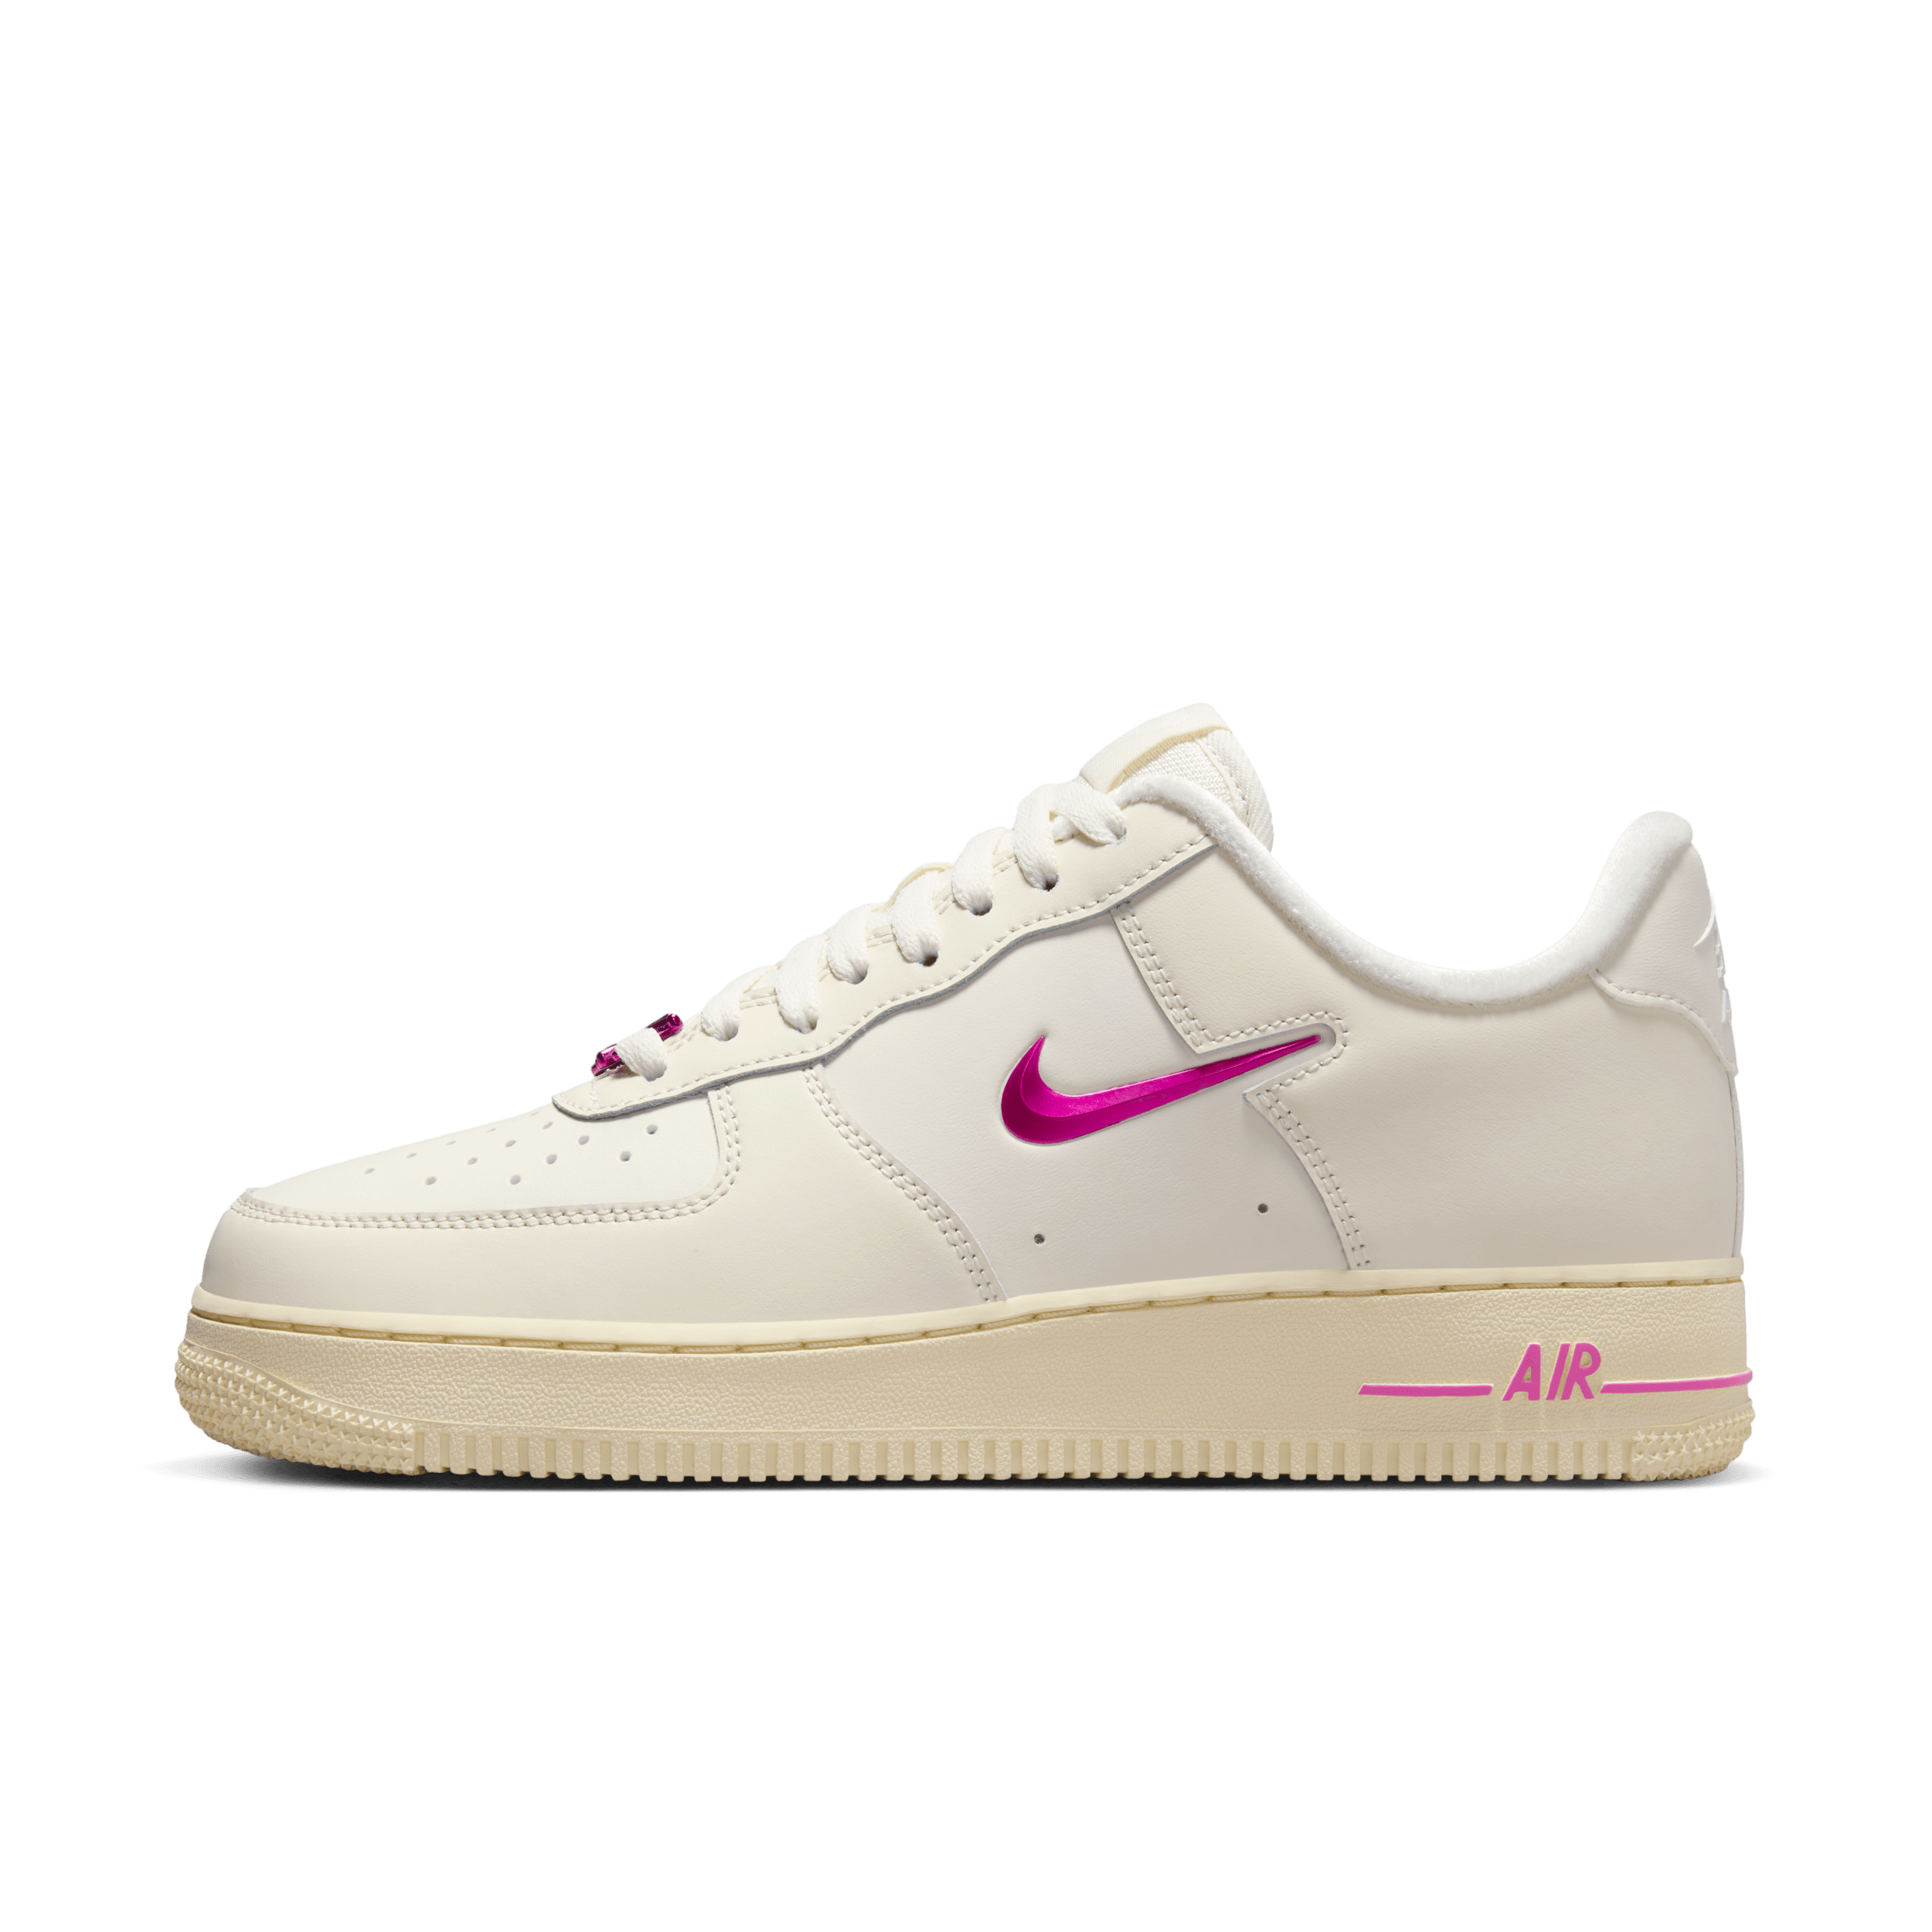 Chaussure Nike Air Force 1 ’07 pour Femme – Blanc